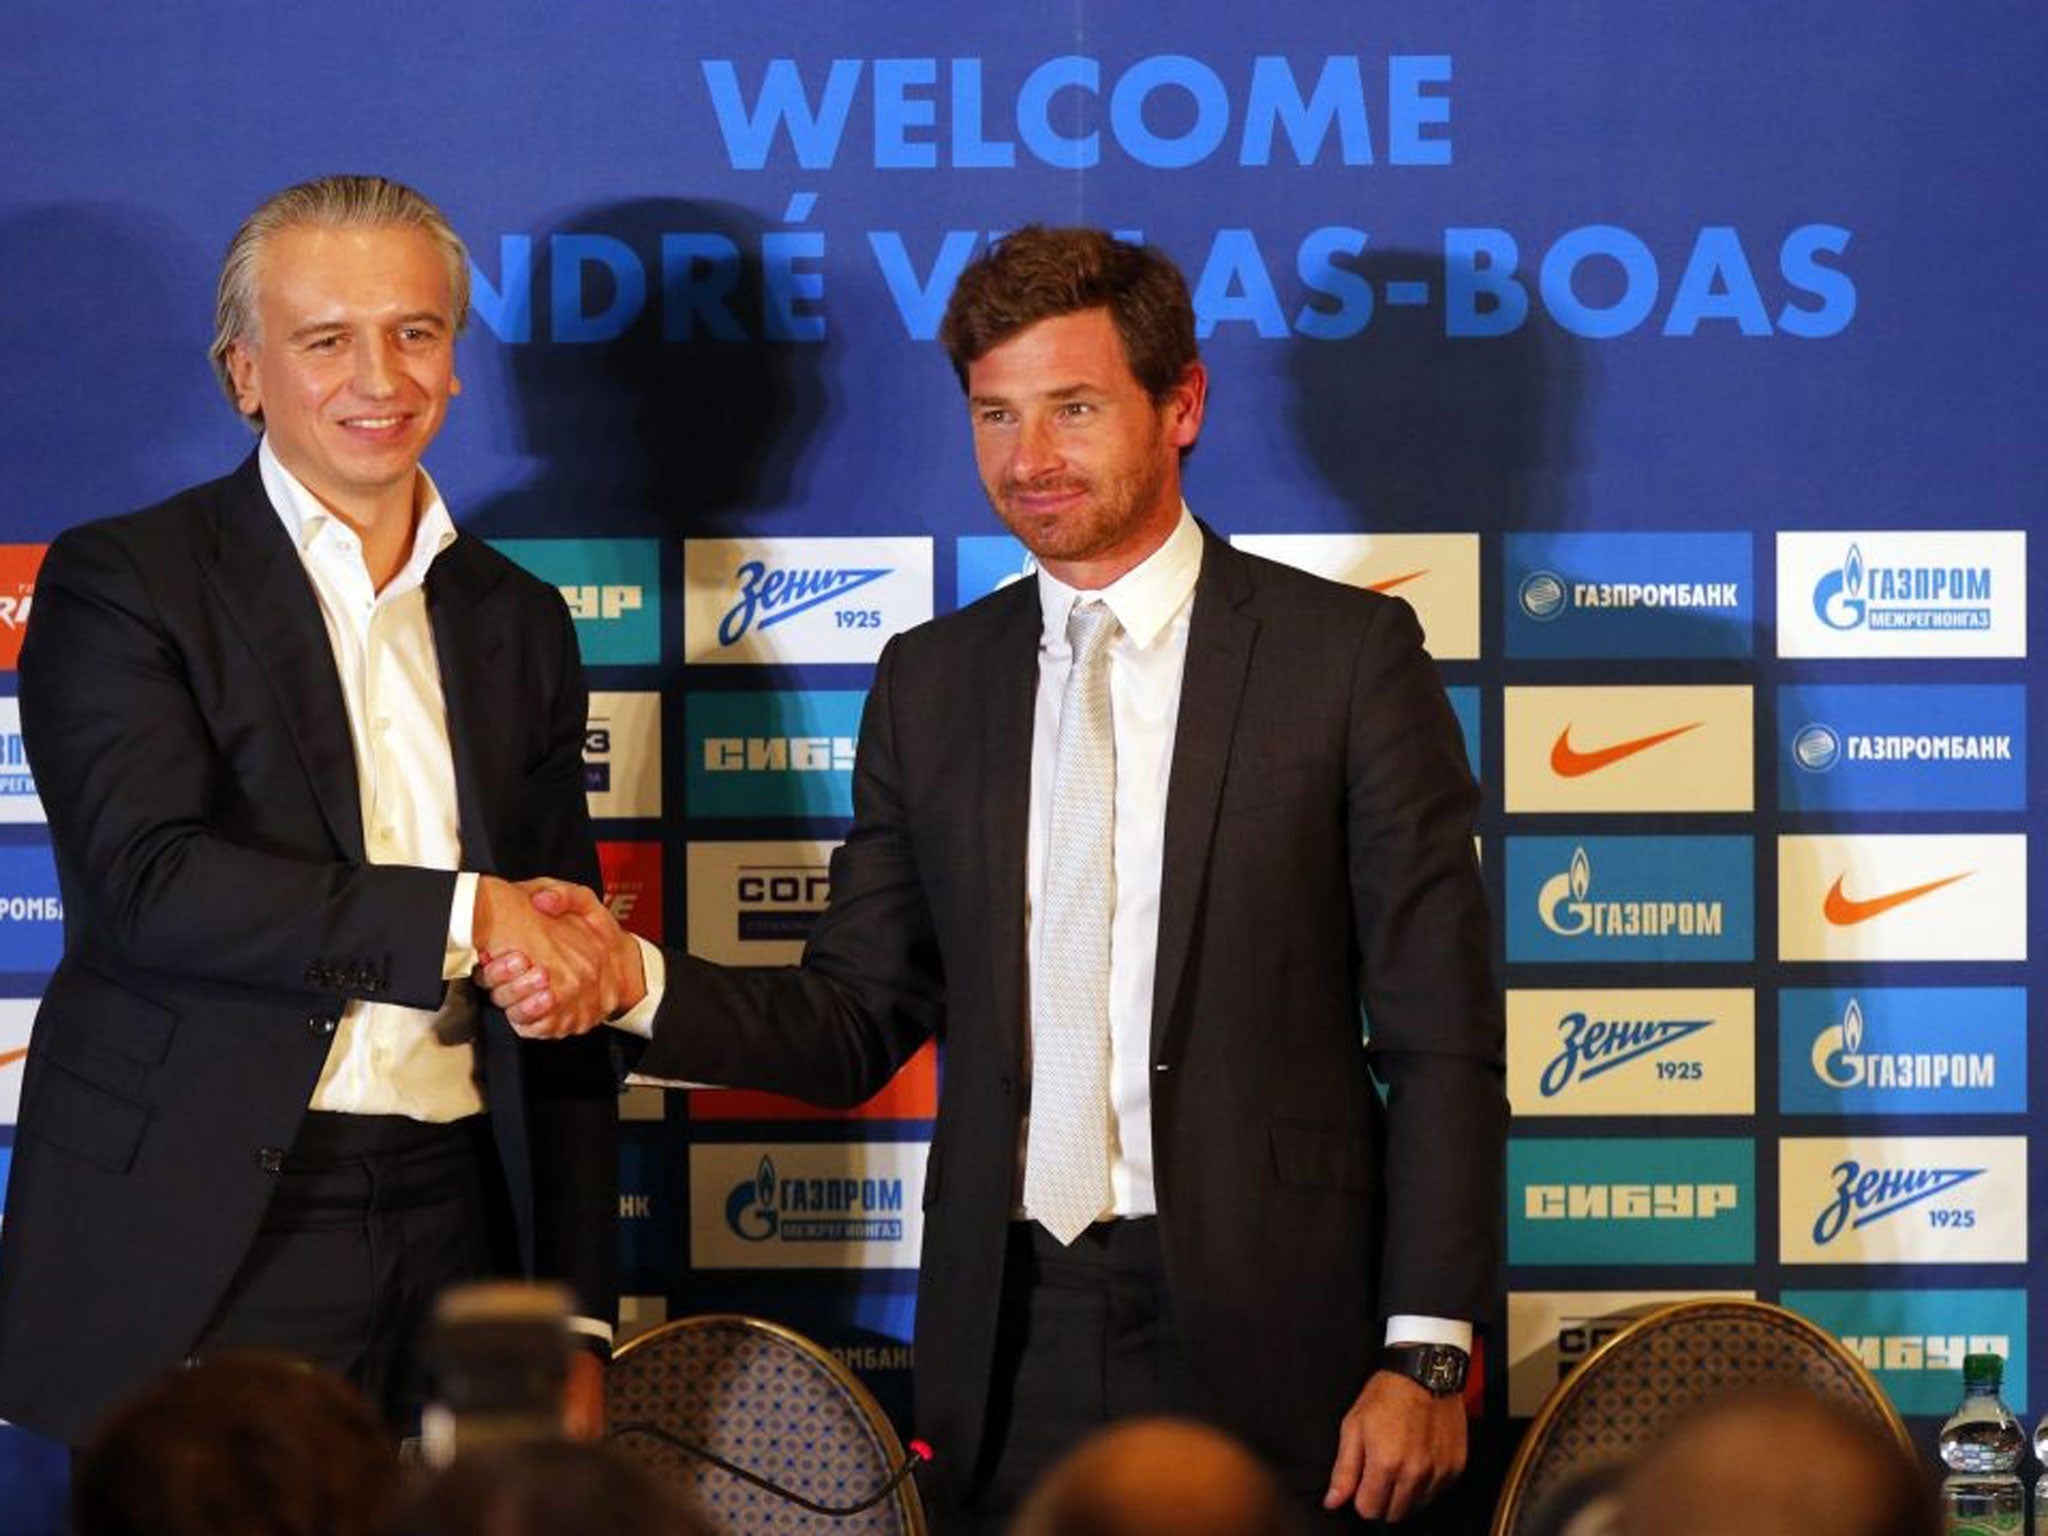 Petersburg's new Portuguese head coach Andre Villas-Boas (right) shakes hands with Zenit President Alexander Dukov